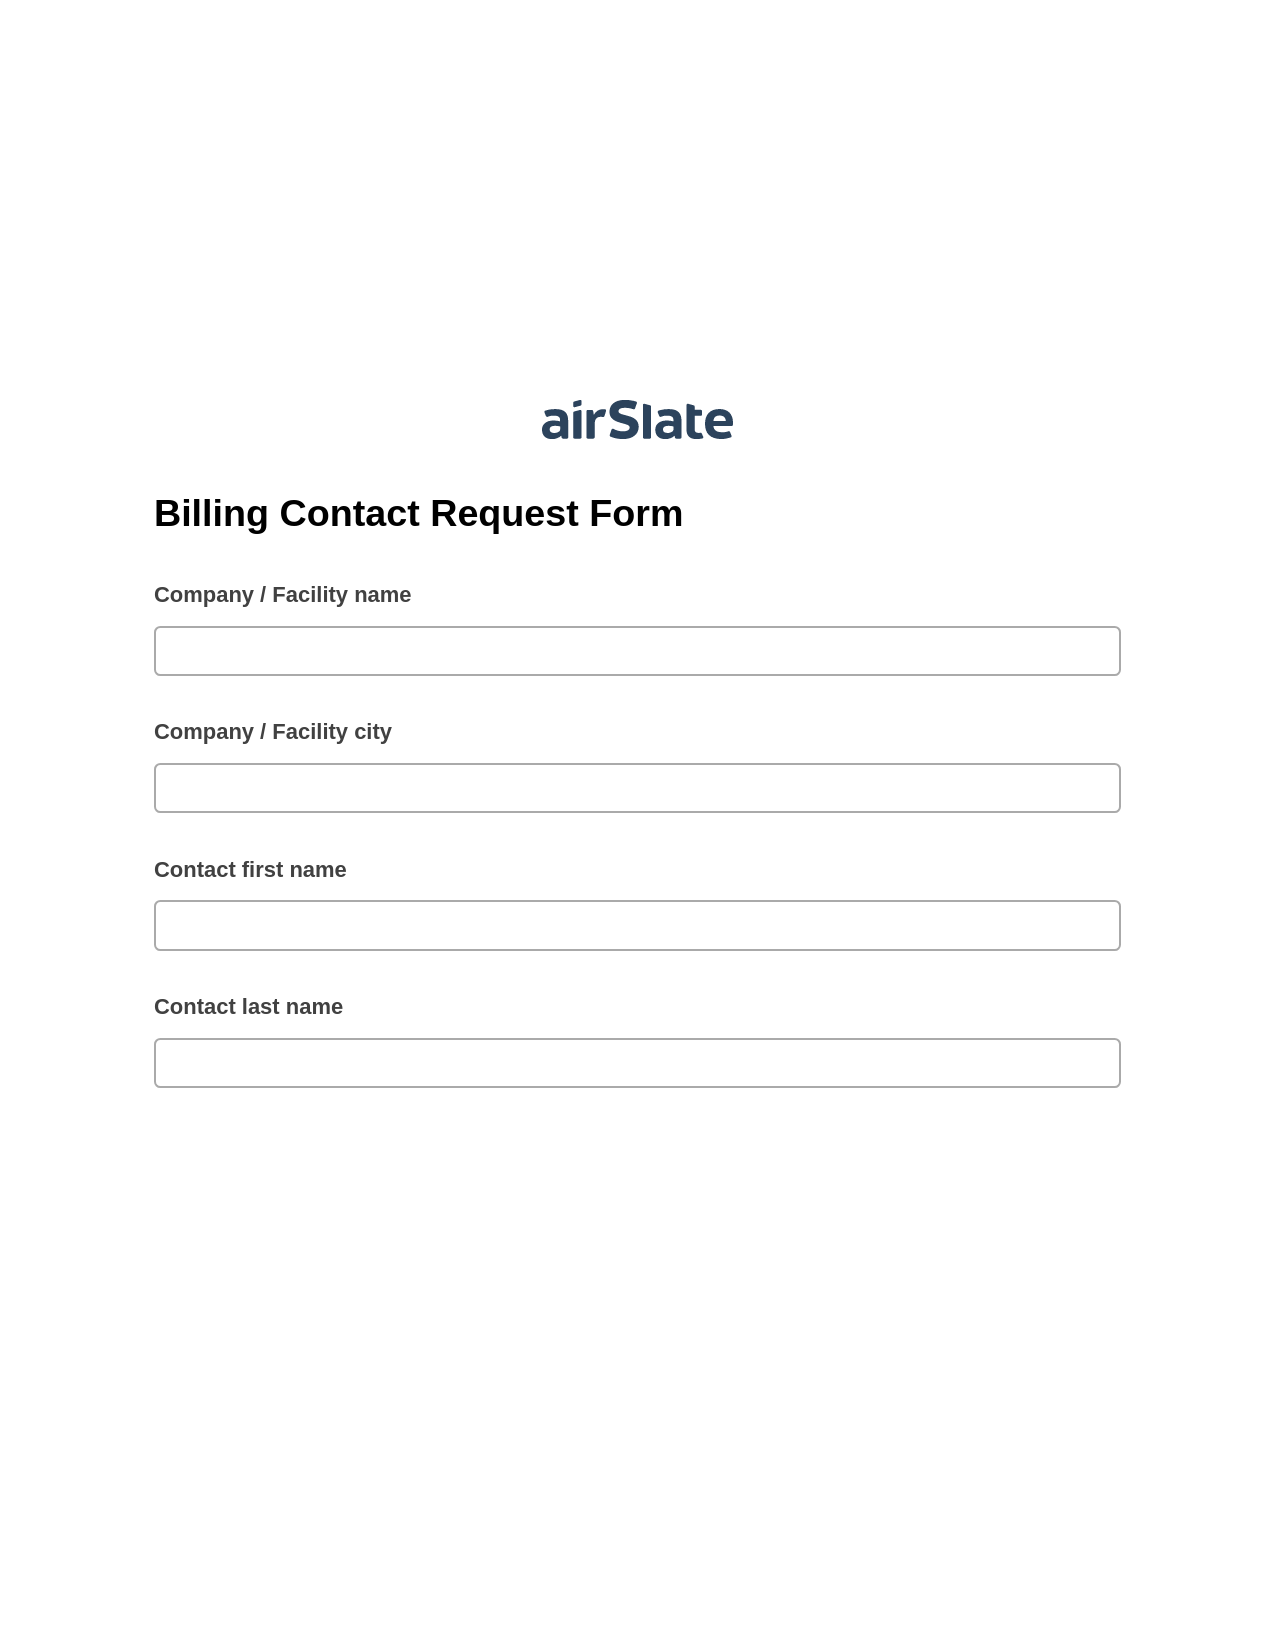 Multirole Billing Contact Request Form Pre-fill from CSV File Bot, Google Sheet Two-Way Binding Bot, Slack Notification Postfinish Bot